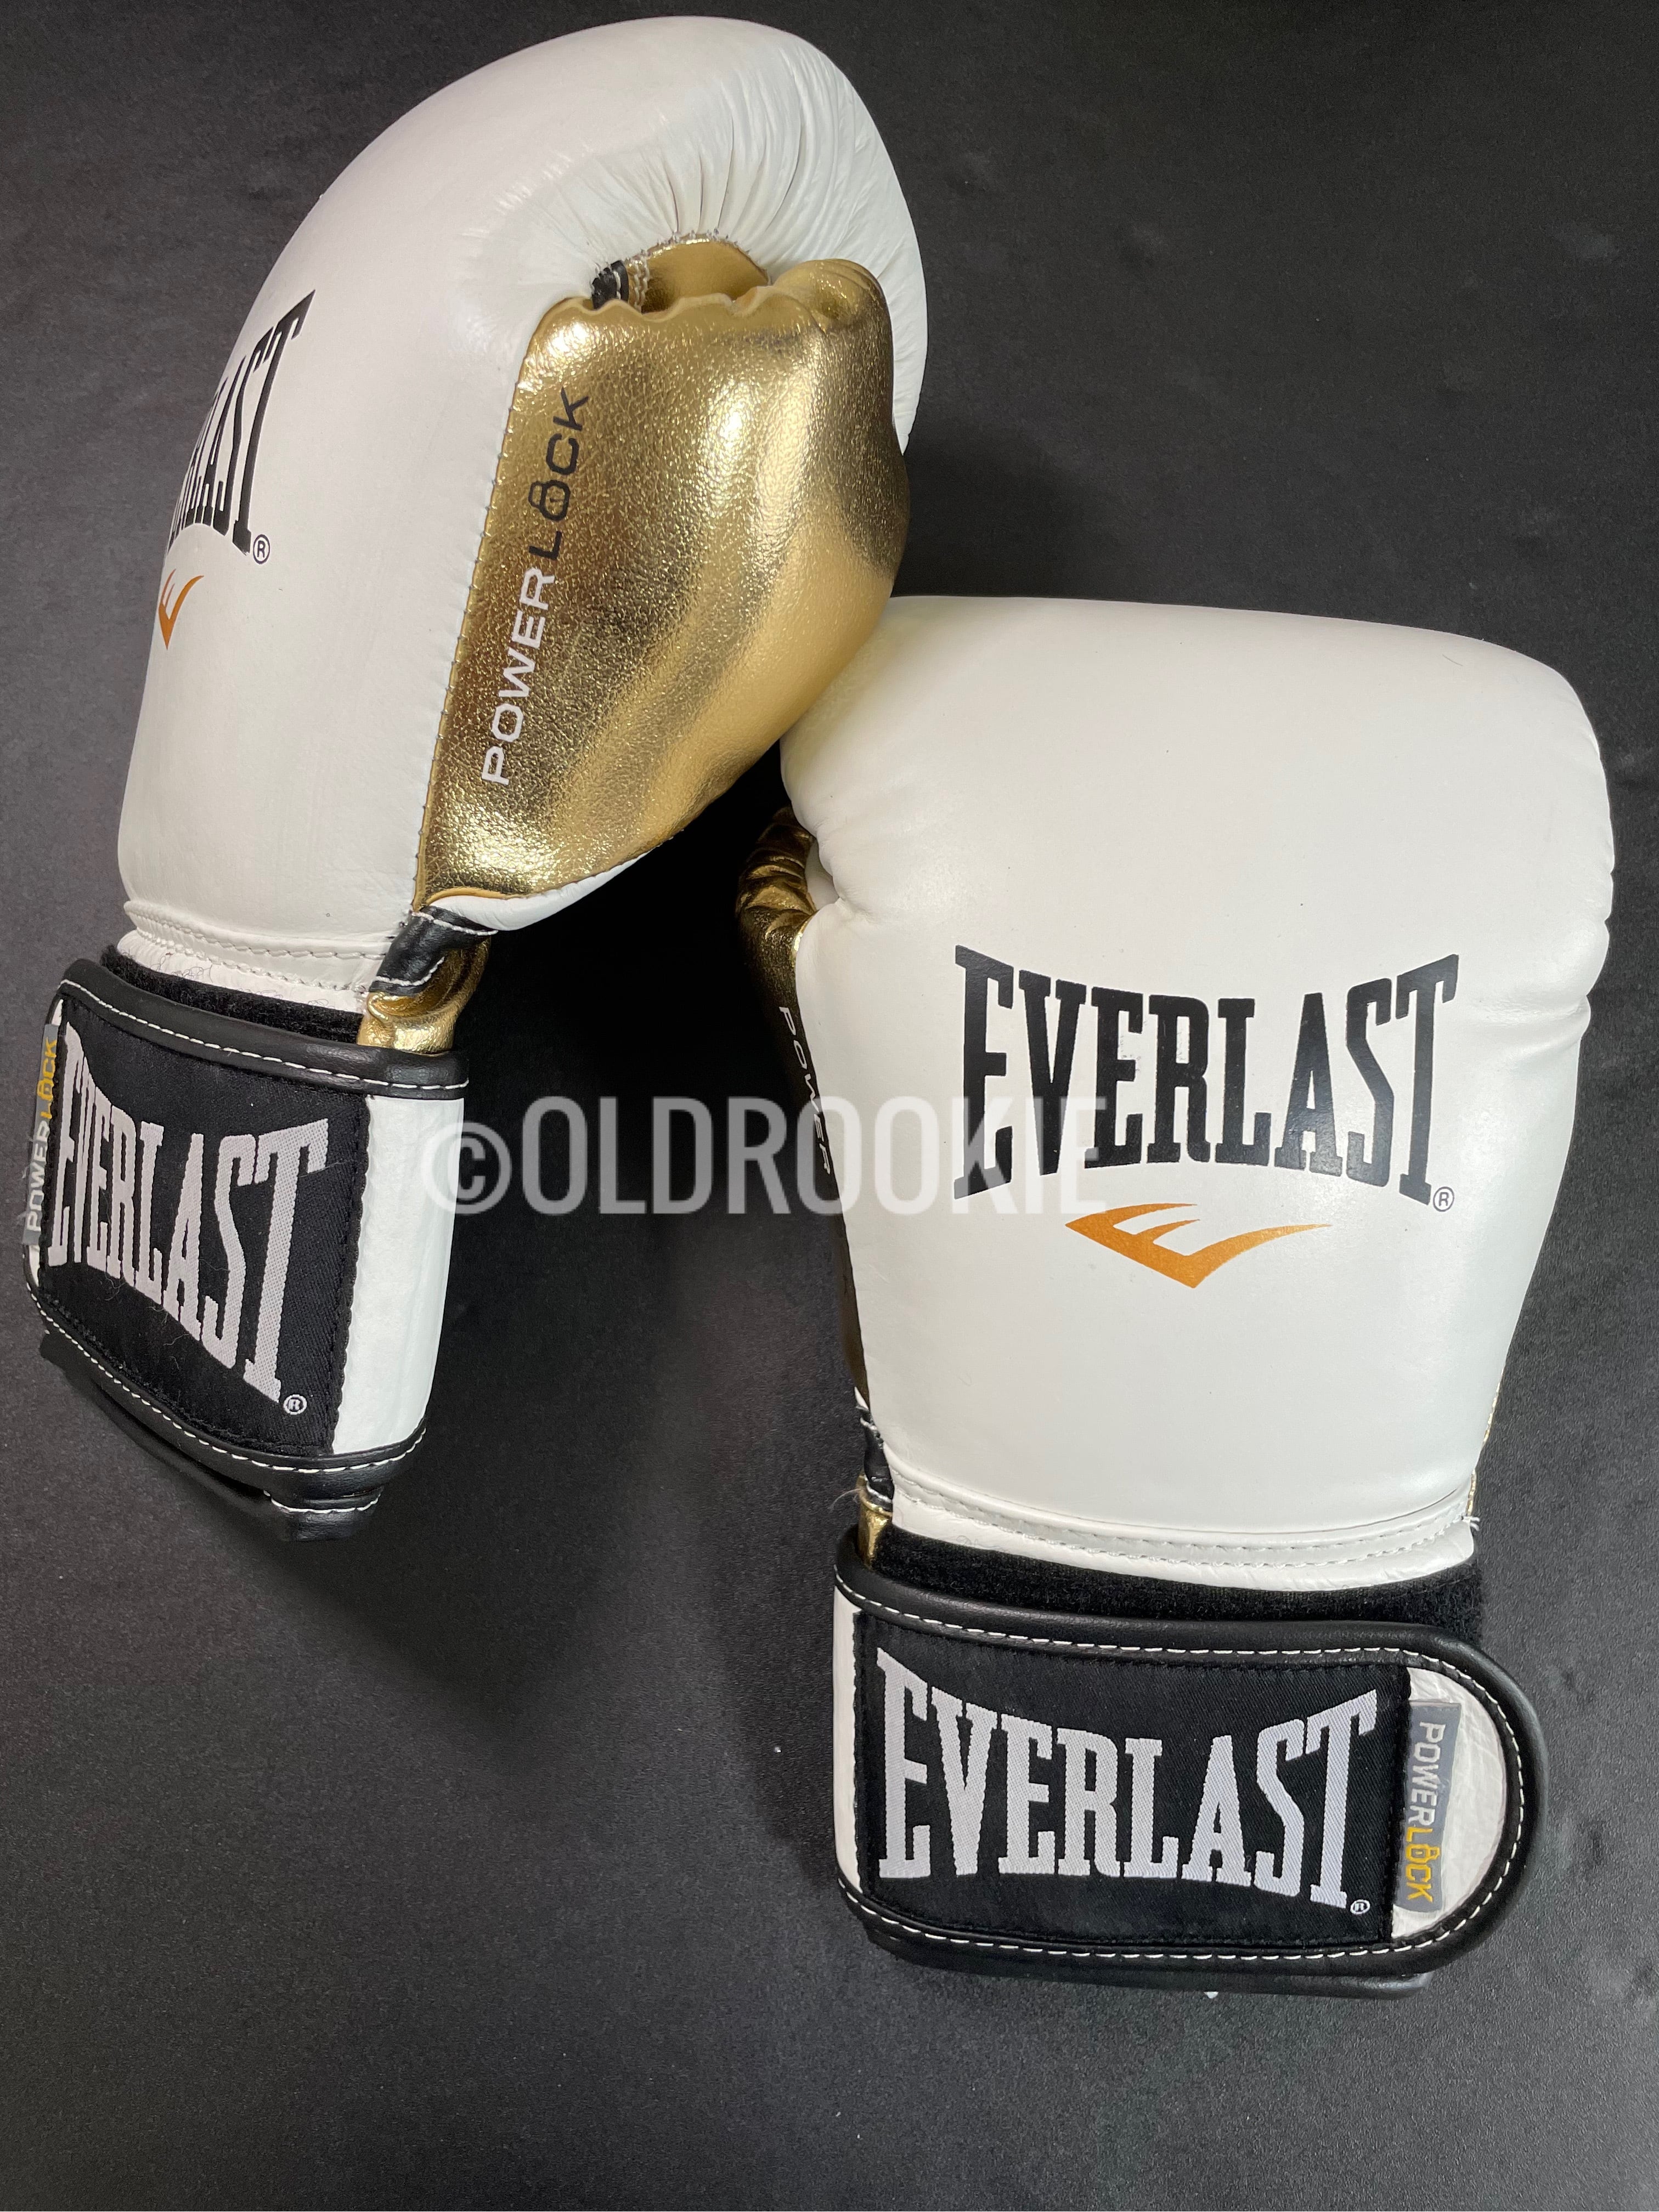 EverlastエバーラストパワーロックフックアンドループPowerlock Hook & Loop Training Boxing Gloves |  ボクシング格闘技専門店 OLDROOKIE